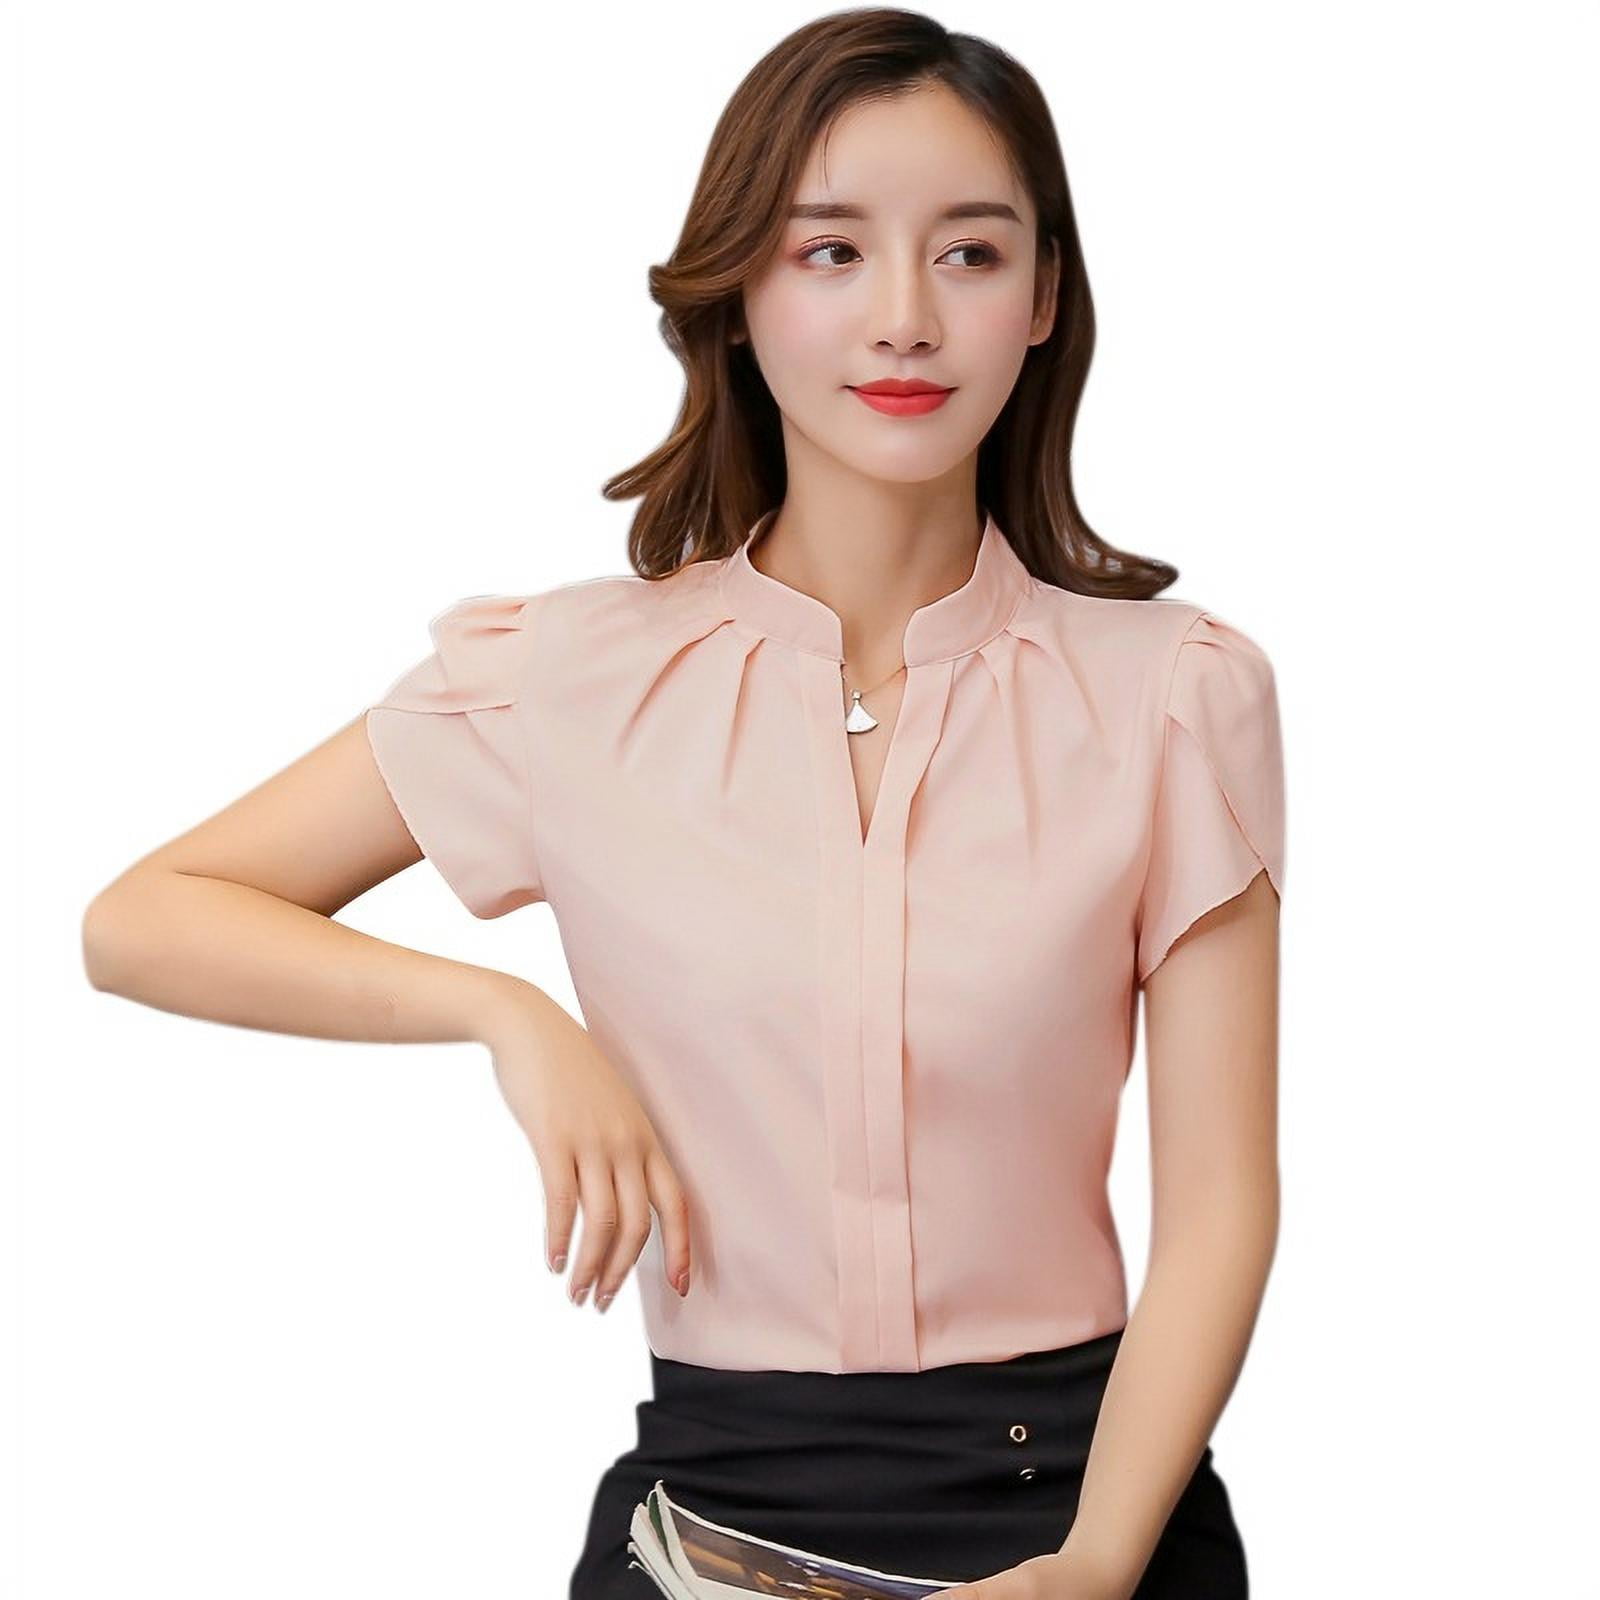 Women's White Shirt Female Short Sleeve Shirt Fashion Leisure Chiffon  Office Blouse Tops 